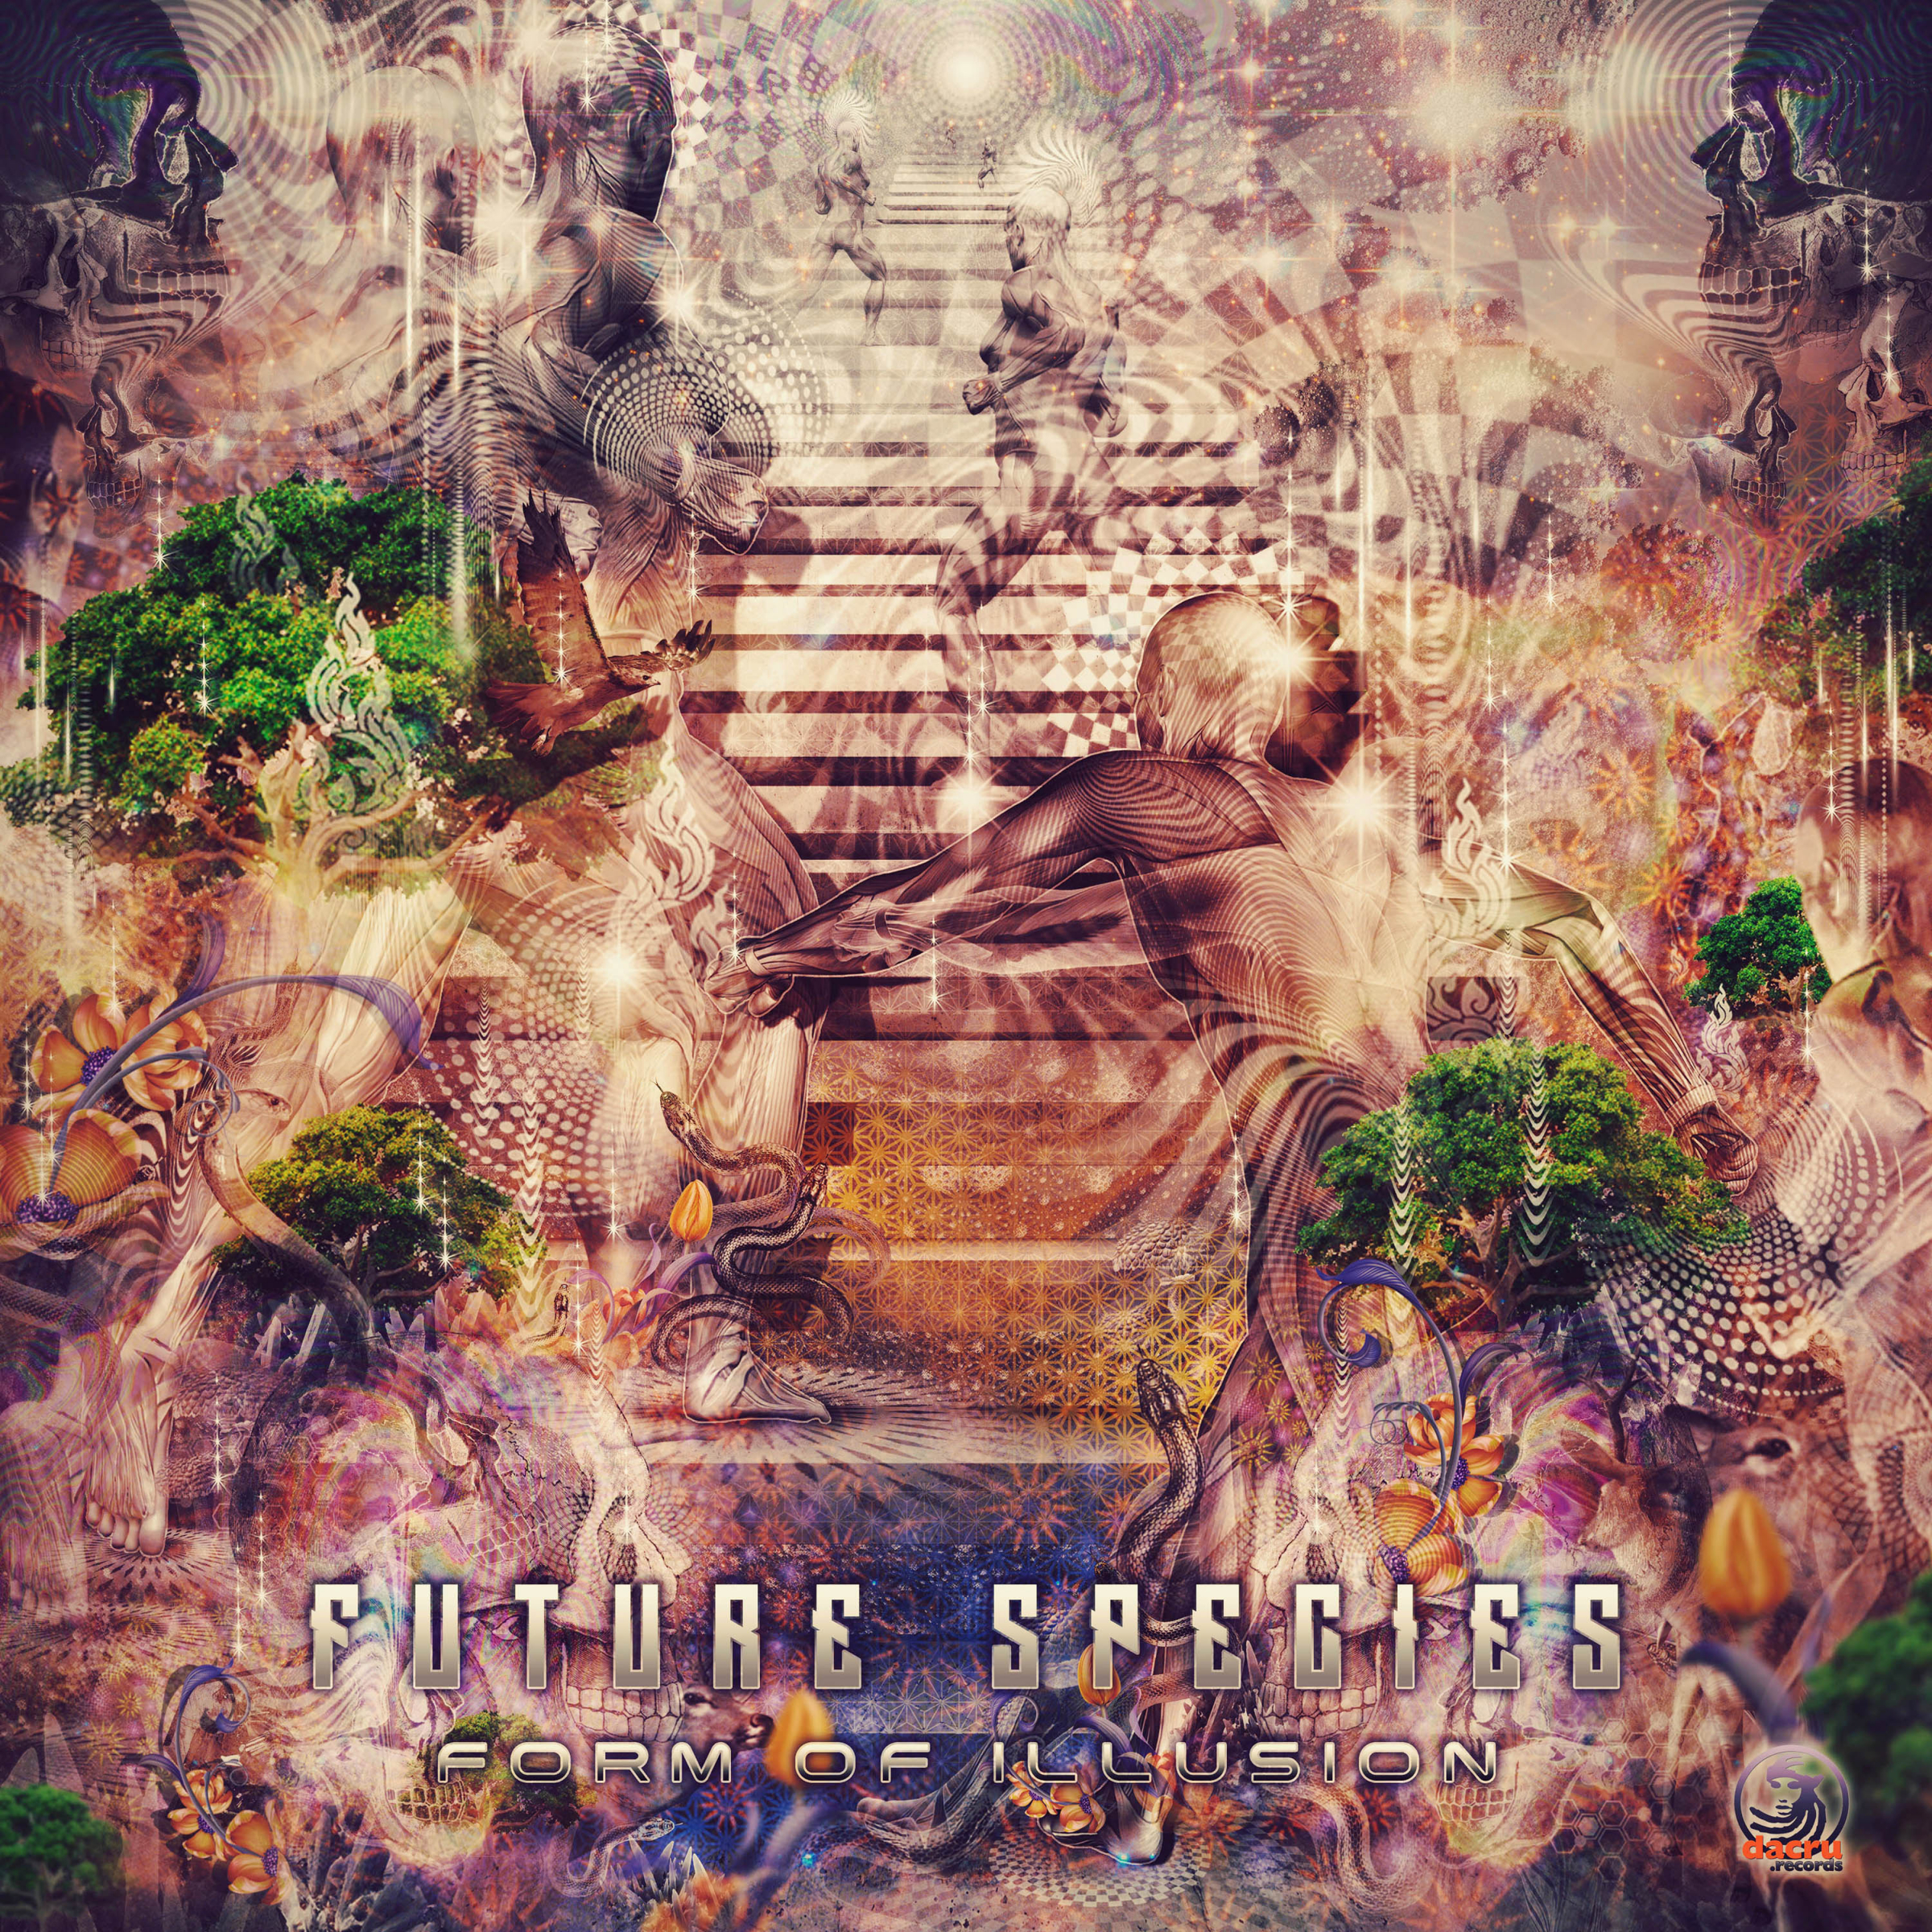 Future special version. Delusion about Future. Future field. Burn in Noise Dacru records. Serpents Recrent albom format.